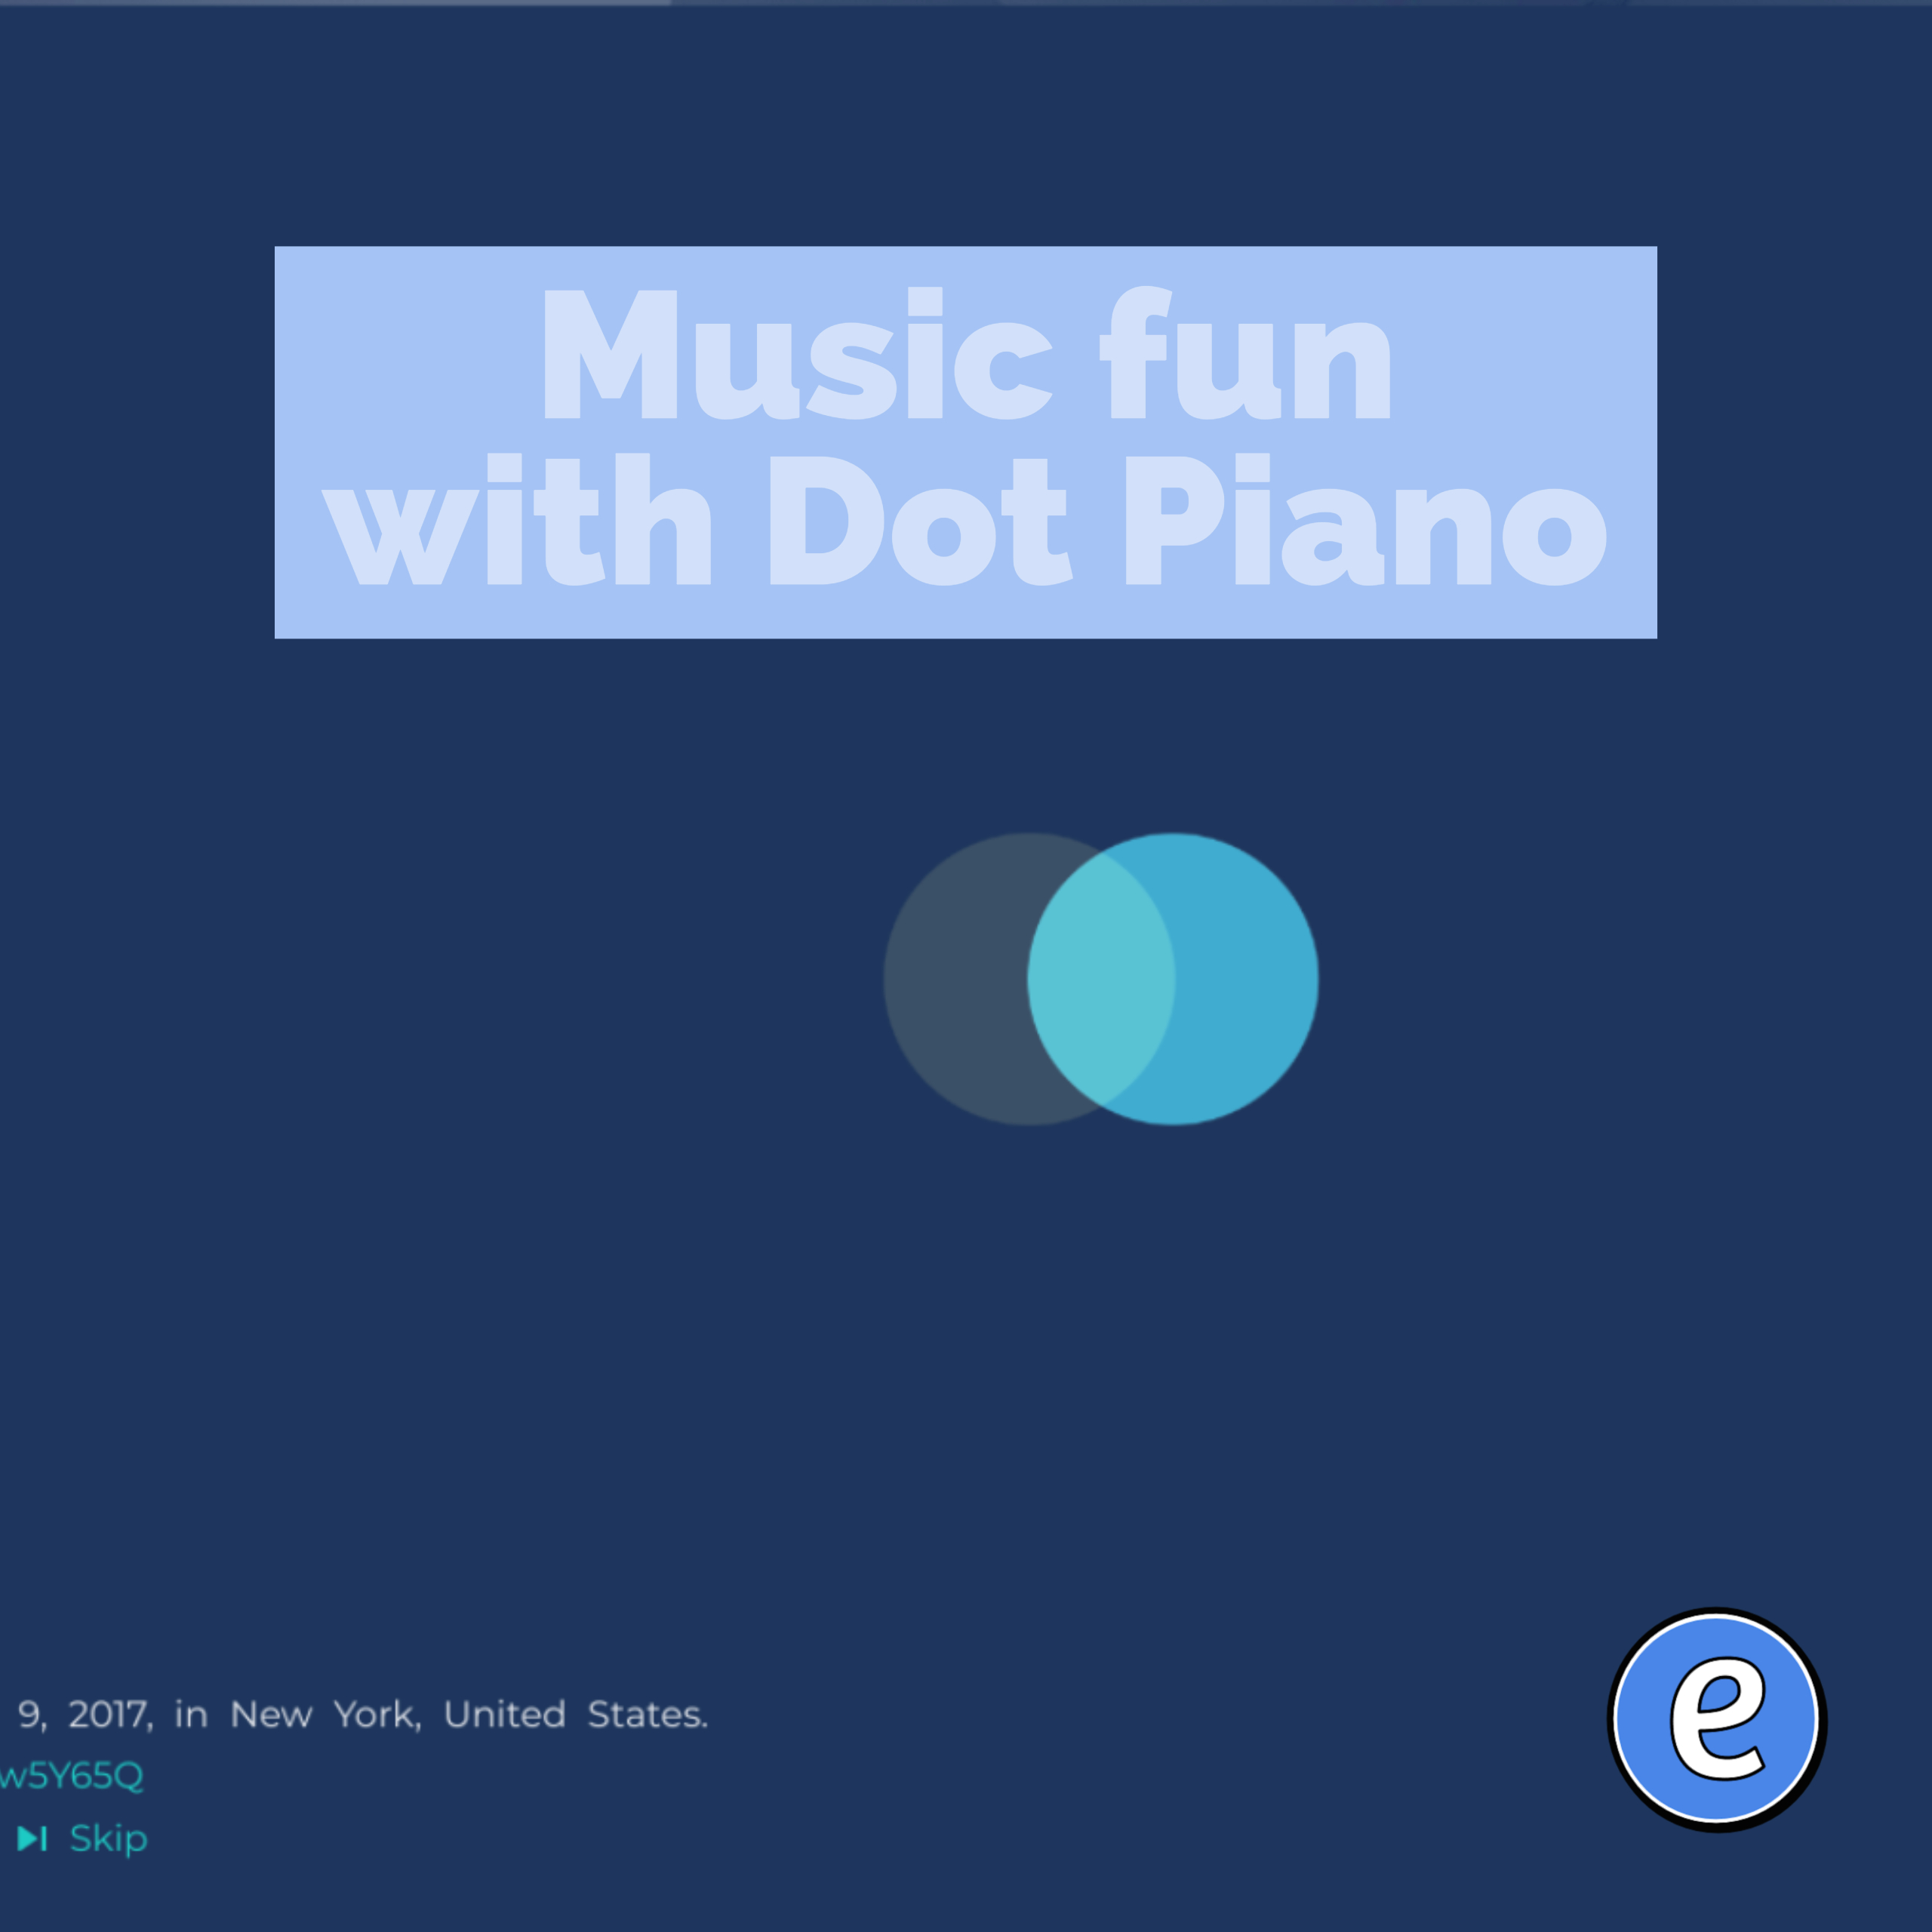 Music fun with Dot Piano